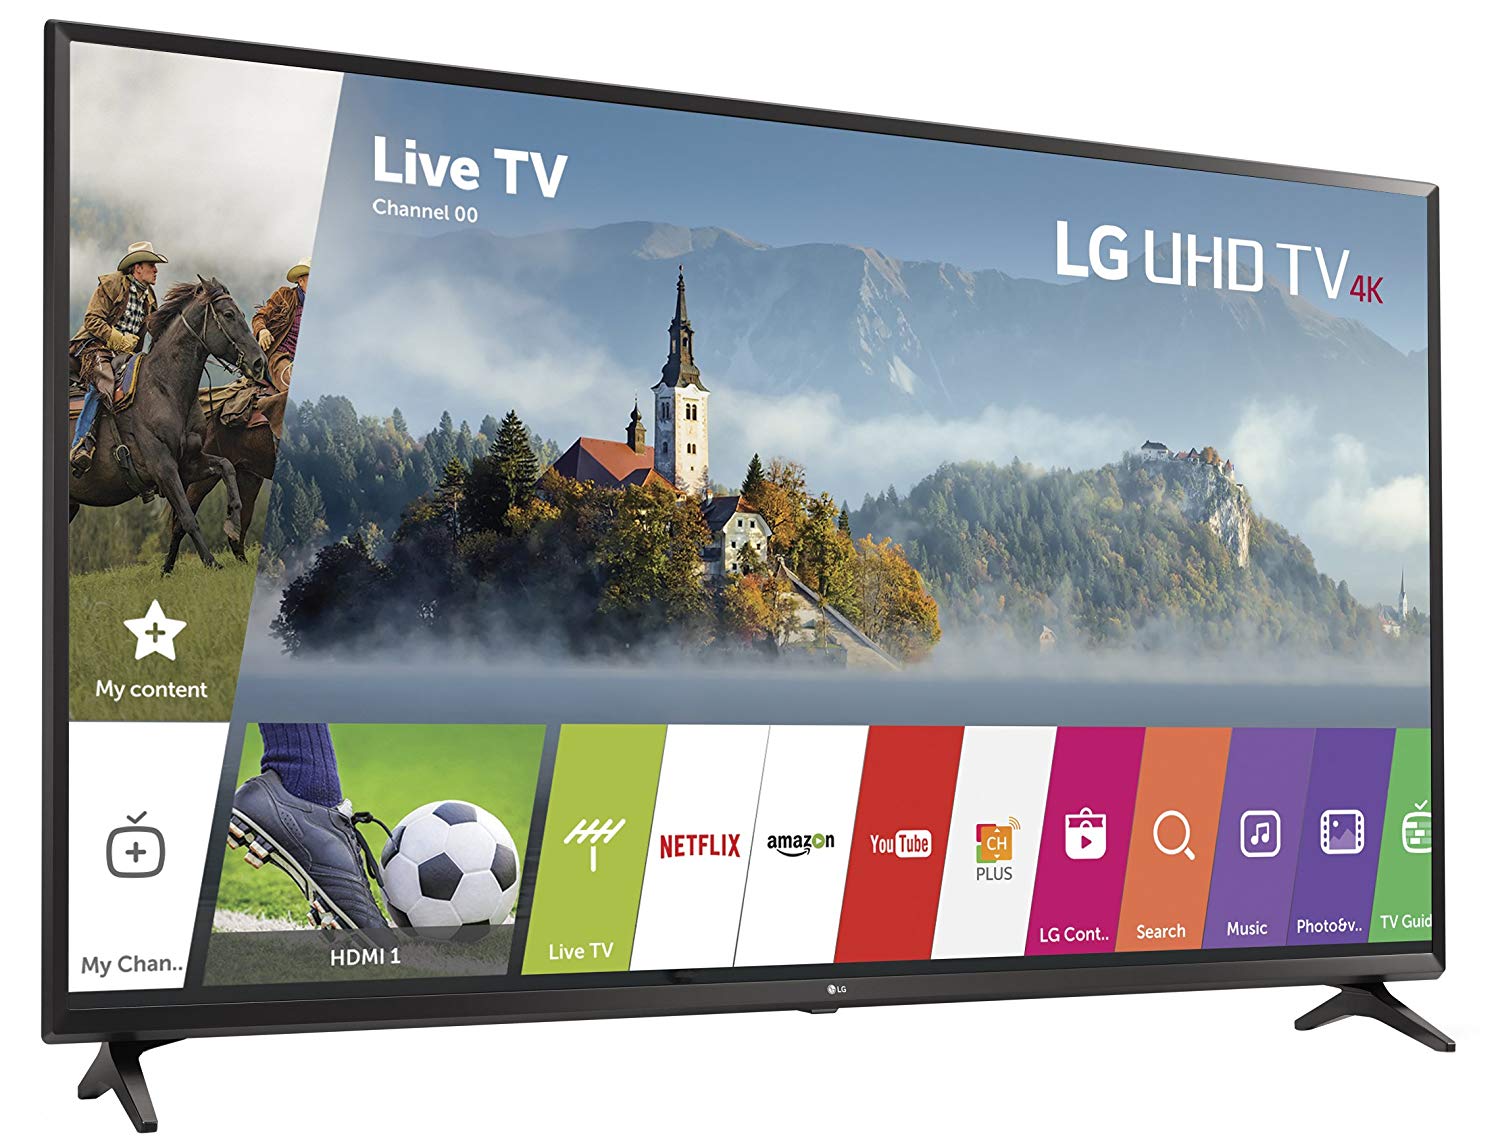 LG Electronics 65UJ6300 Televisor LED inteligente 4K Ultra HD de 65 puadas (modelo 2017)